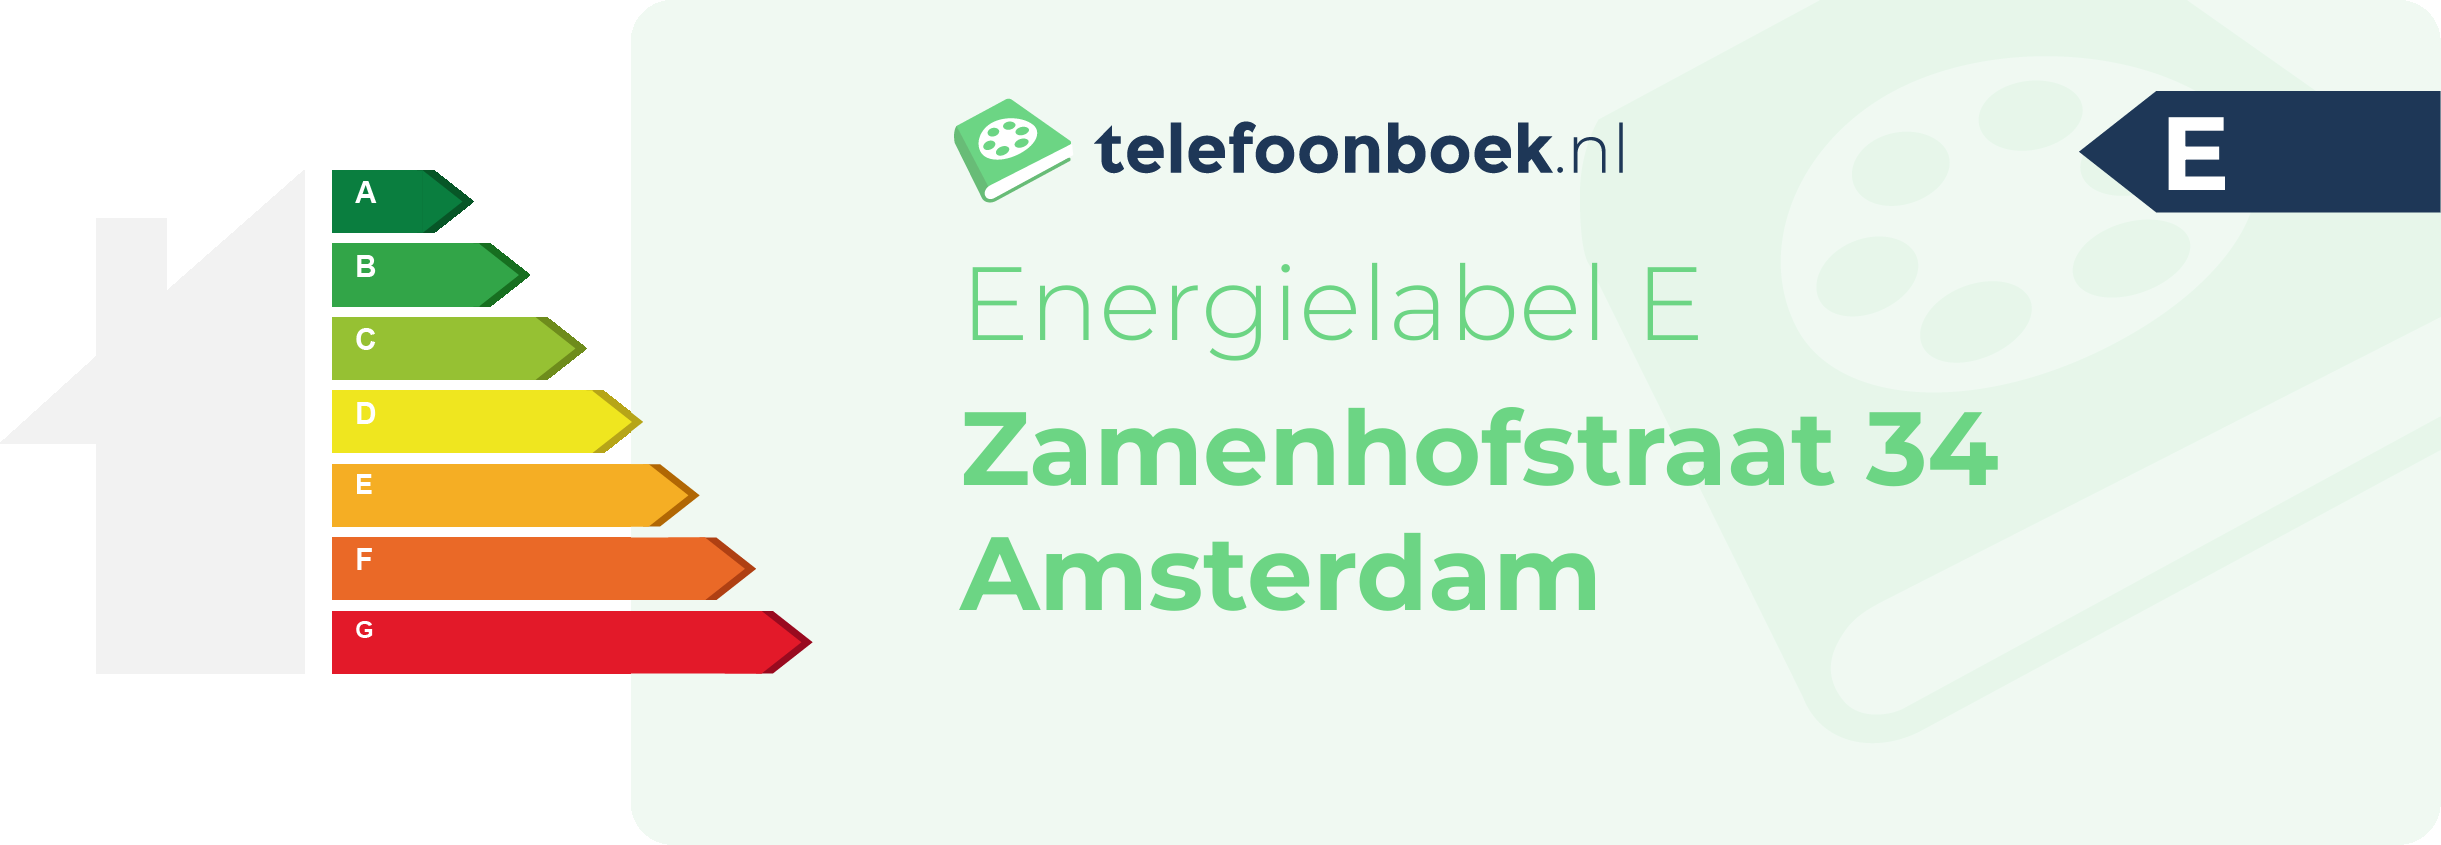 Energielabel Zamenhofstraat 34 Amsterdam